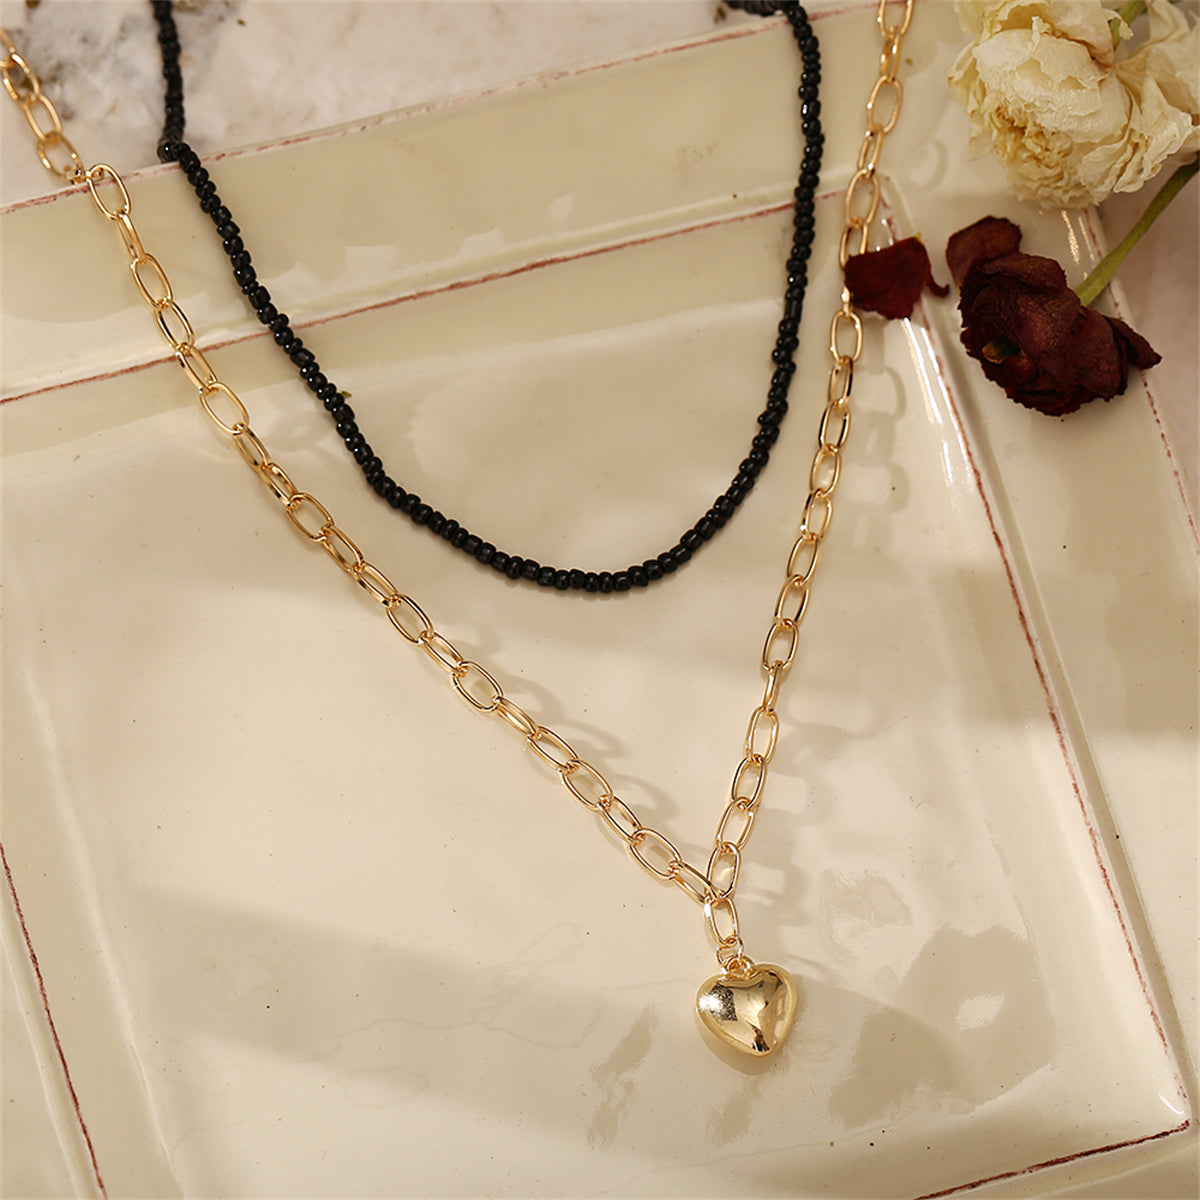 Black Howlite & 18K Gold-Plated Heart Pendant Necklace Set